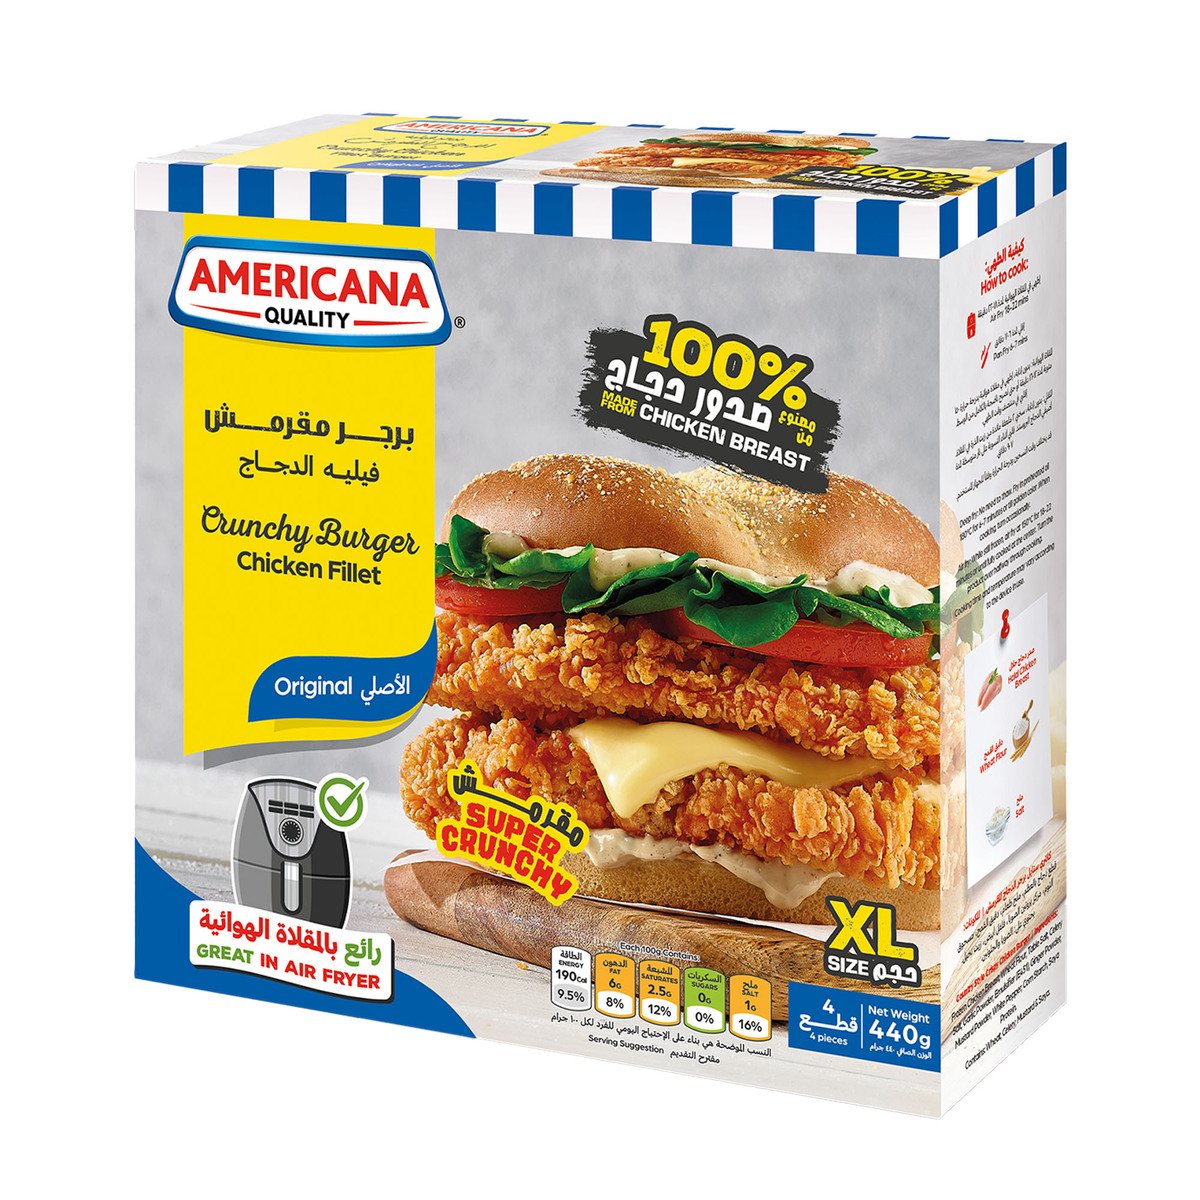 Americana Crunchy Burger Chicken Fillet Original 440 g